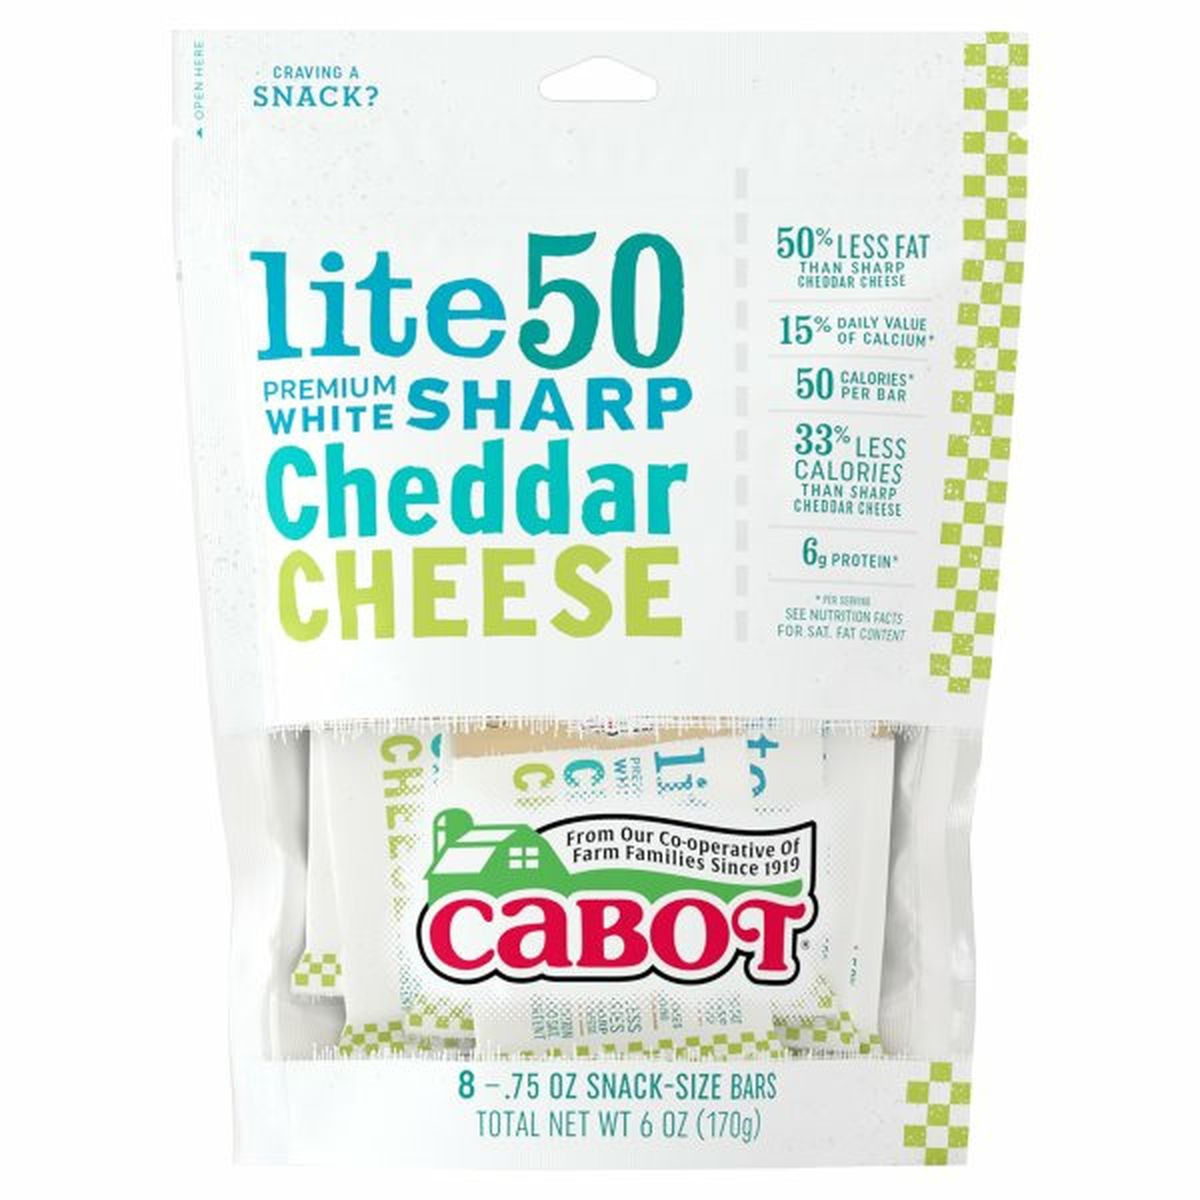 Calories in Cabot Lite 50 Cheese Bars, Premium White Sharp Cheddar